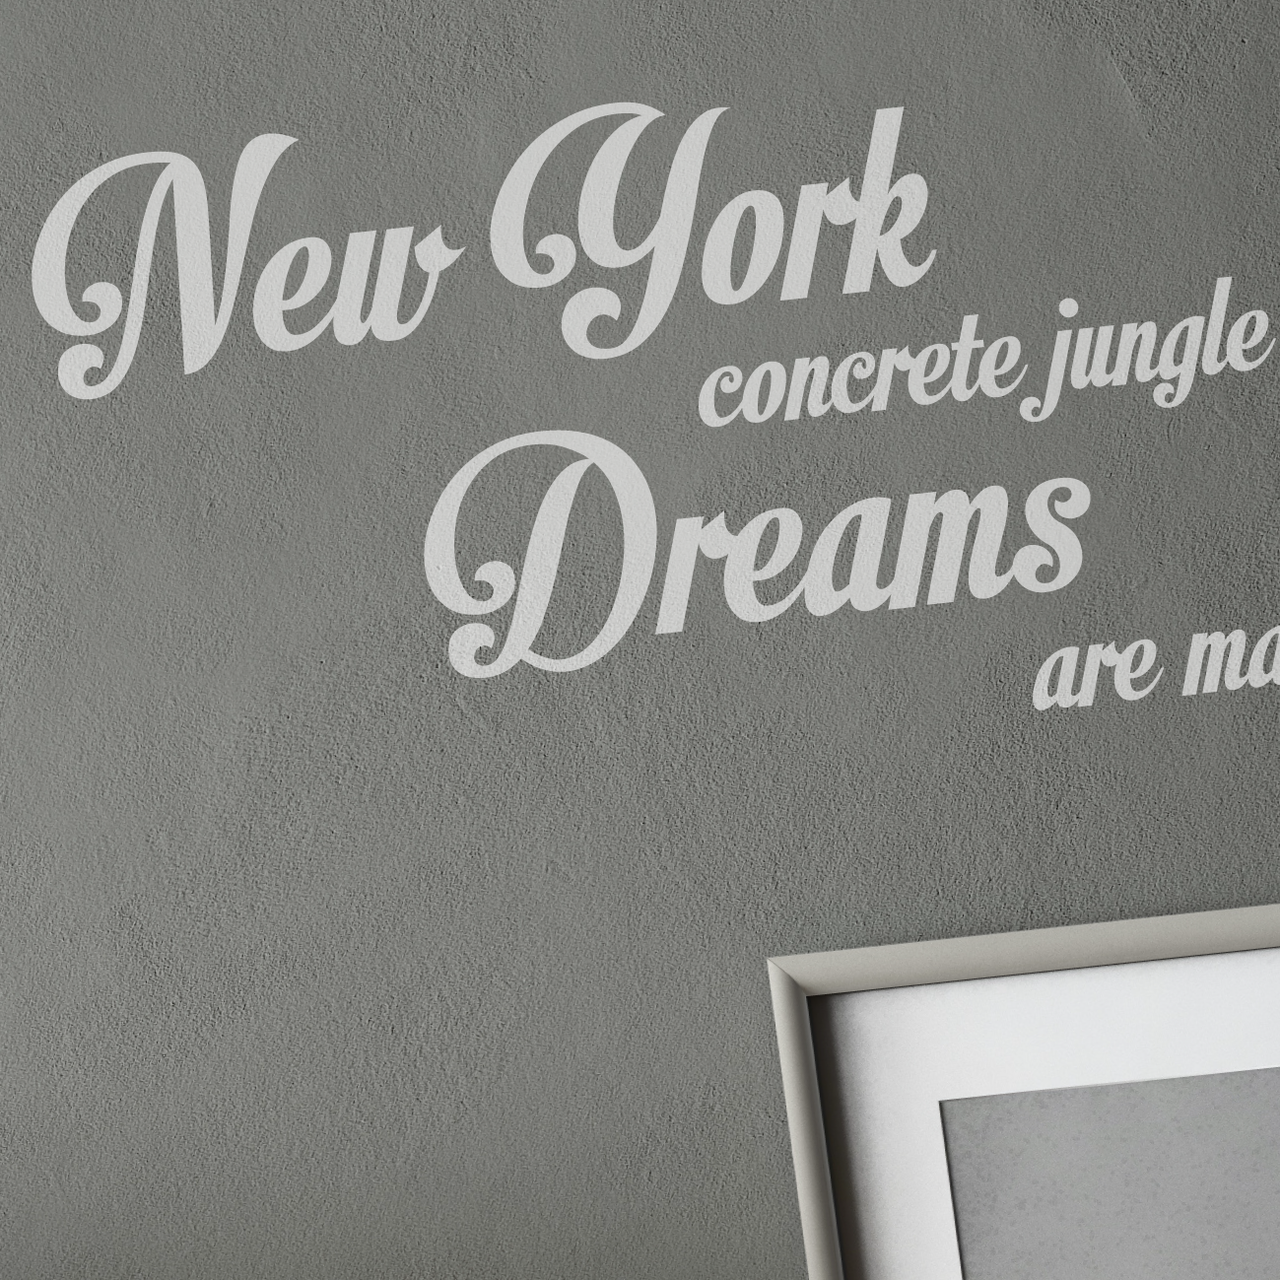 New York Dreams Wall Decal